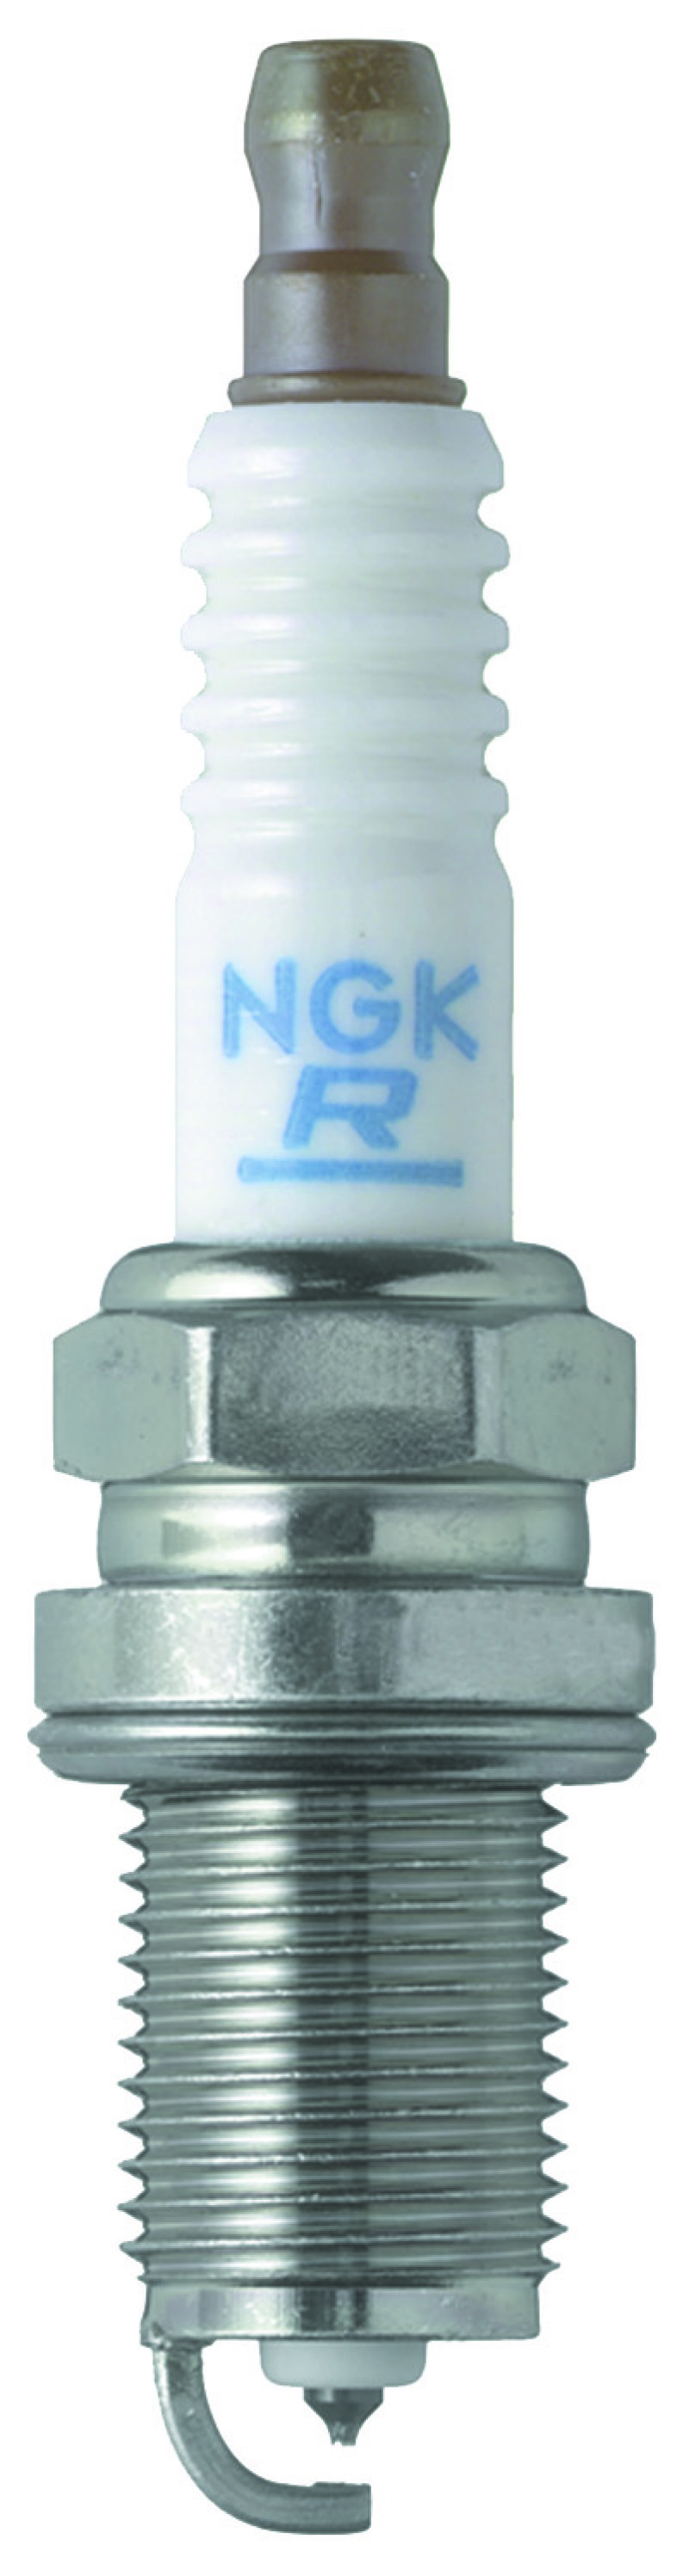 NGK Laser Platinum Spark Plug Box of 4 (PFR5N-11) - 5838